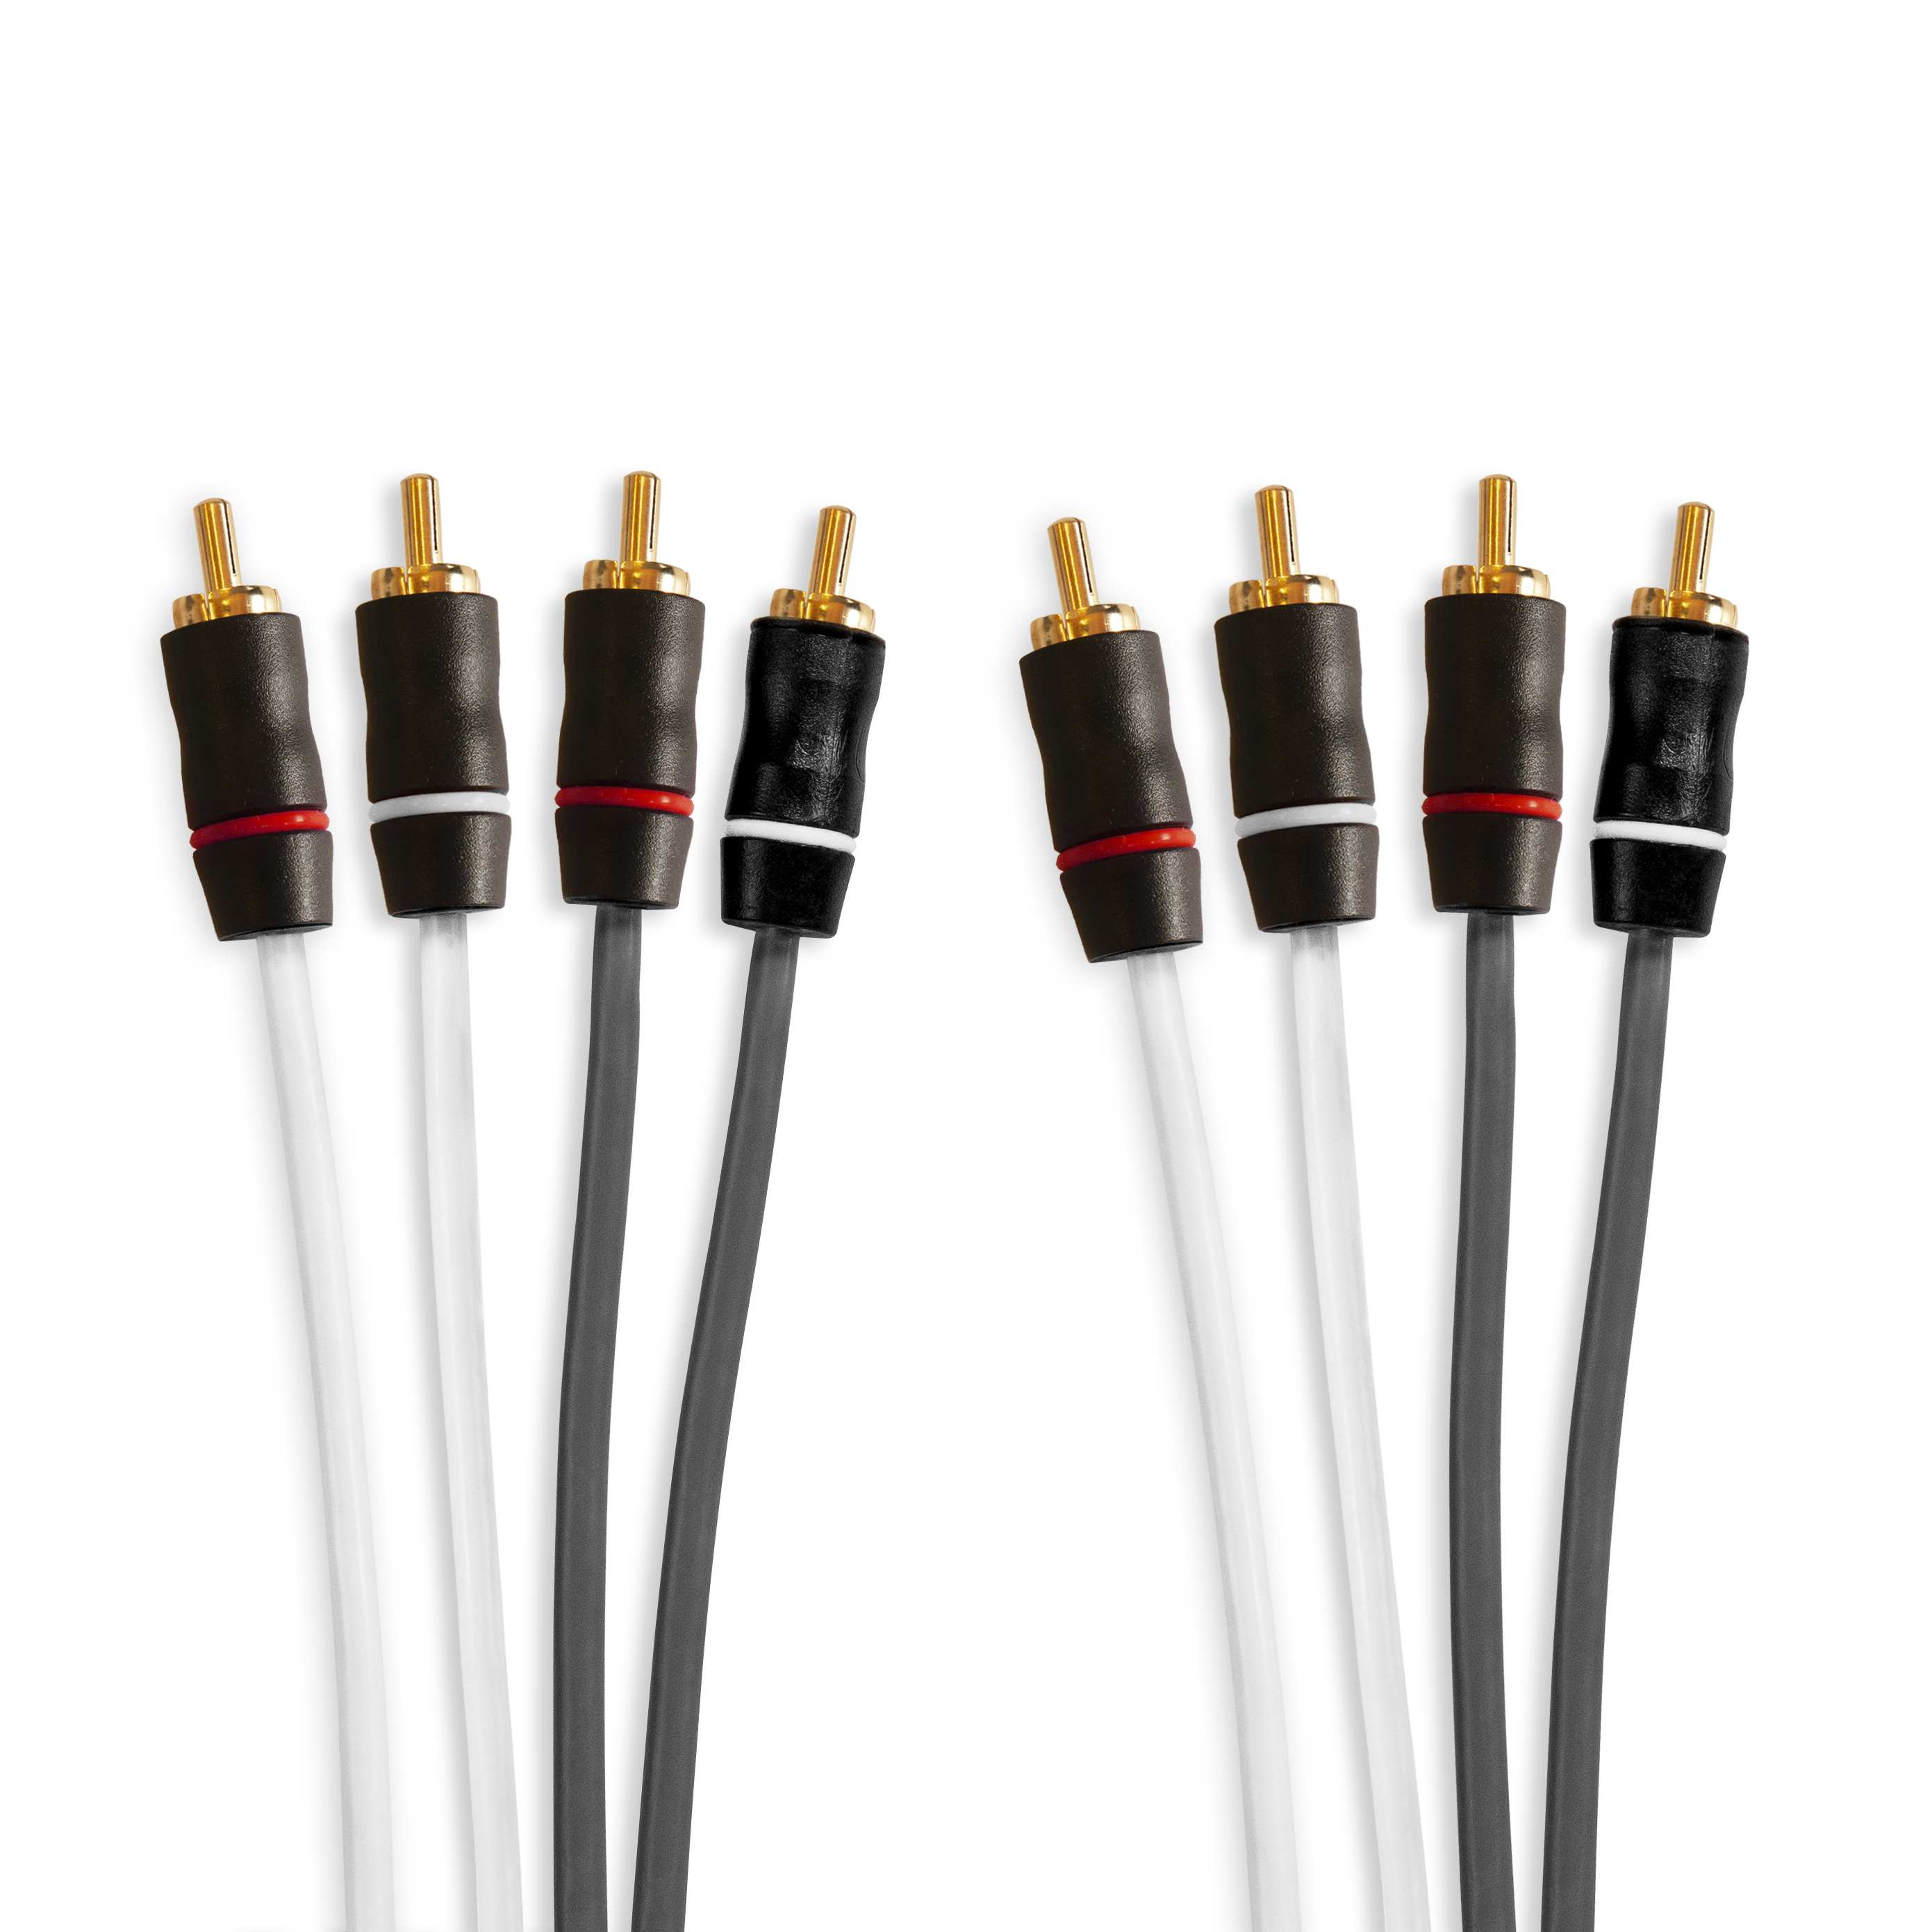 Garmin Fusion® RCA kabler, 4 kanaler, 6 fod (1,83 m) kabel